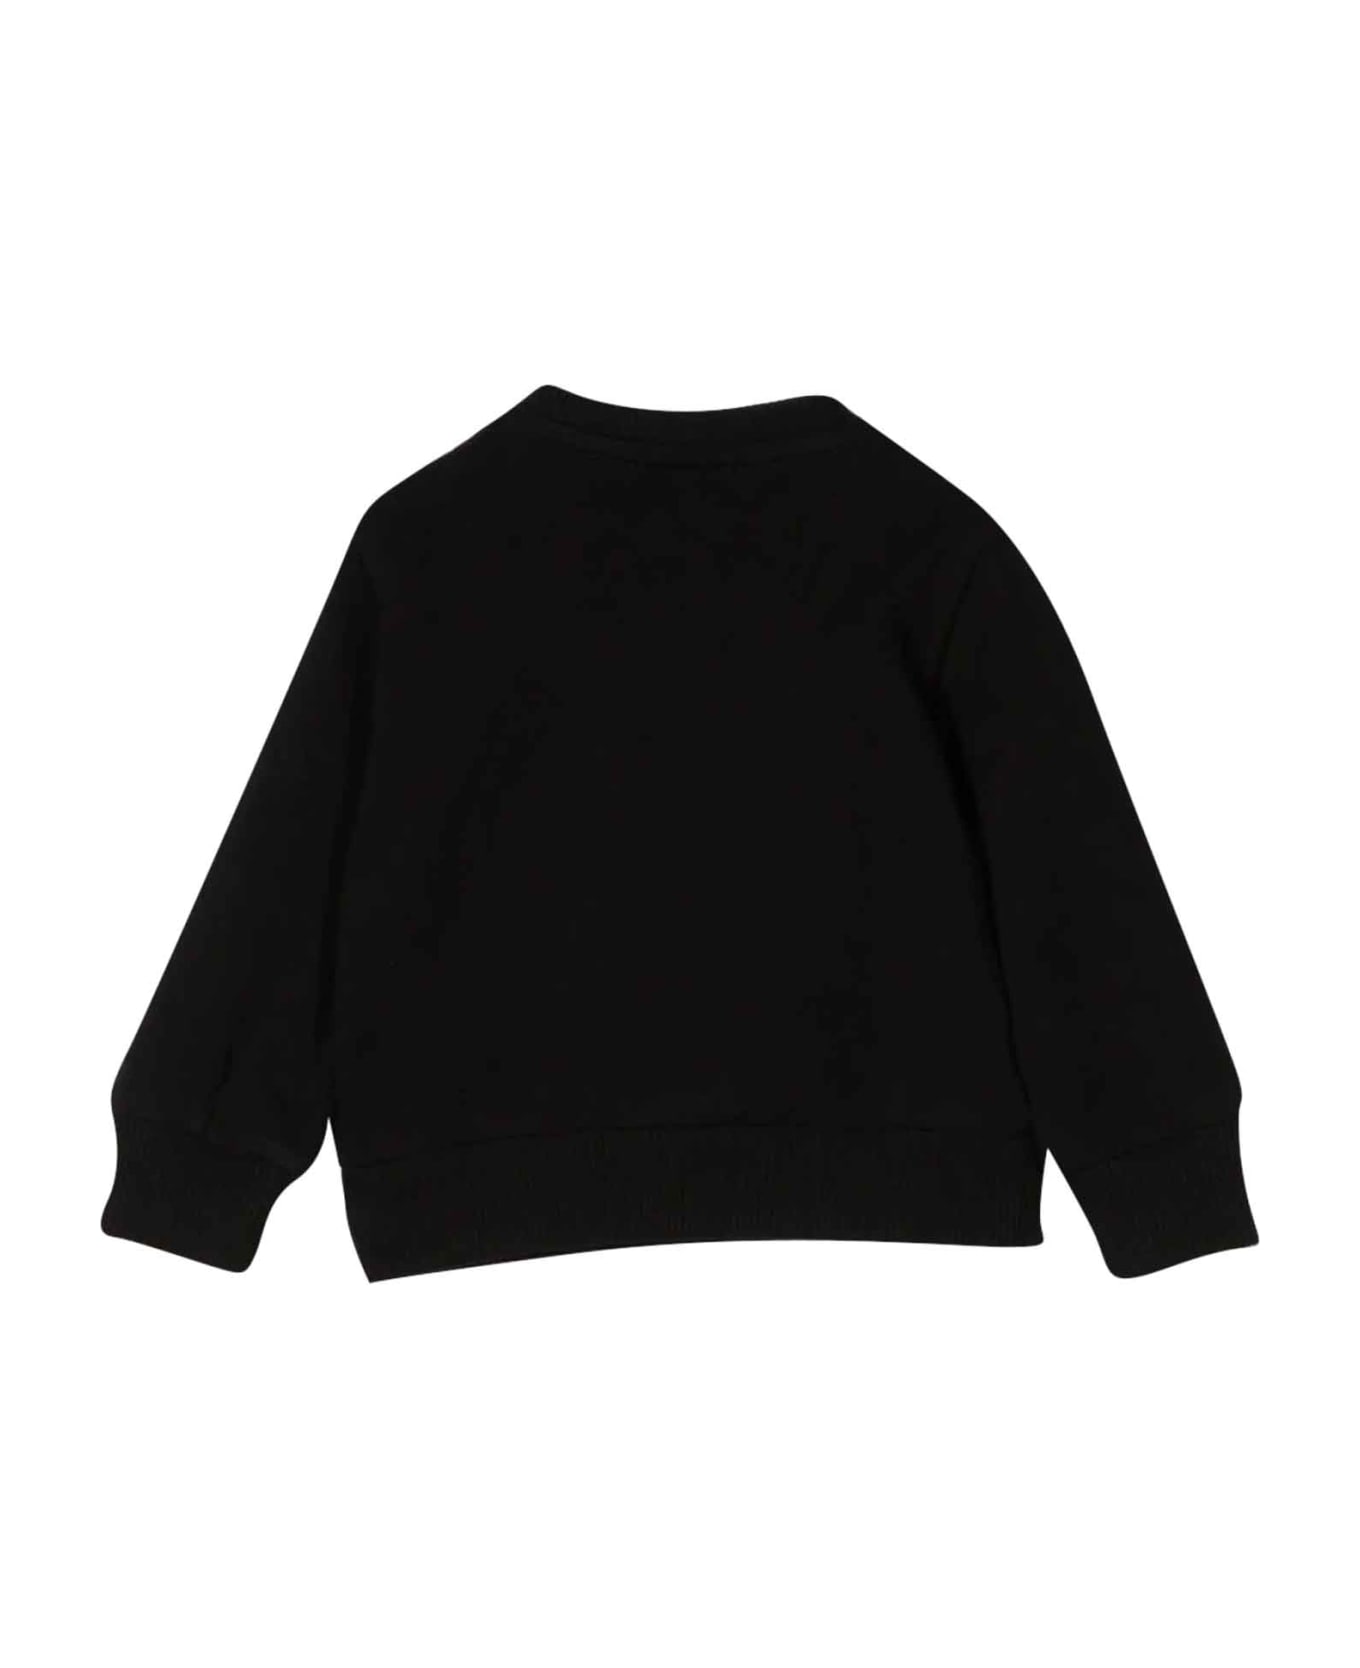 Versace Black Sweatshirt Unisex Kids. - Fucsia/nero